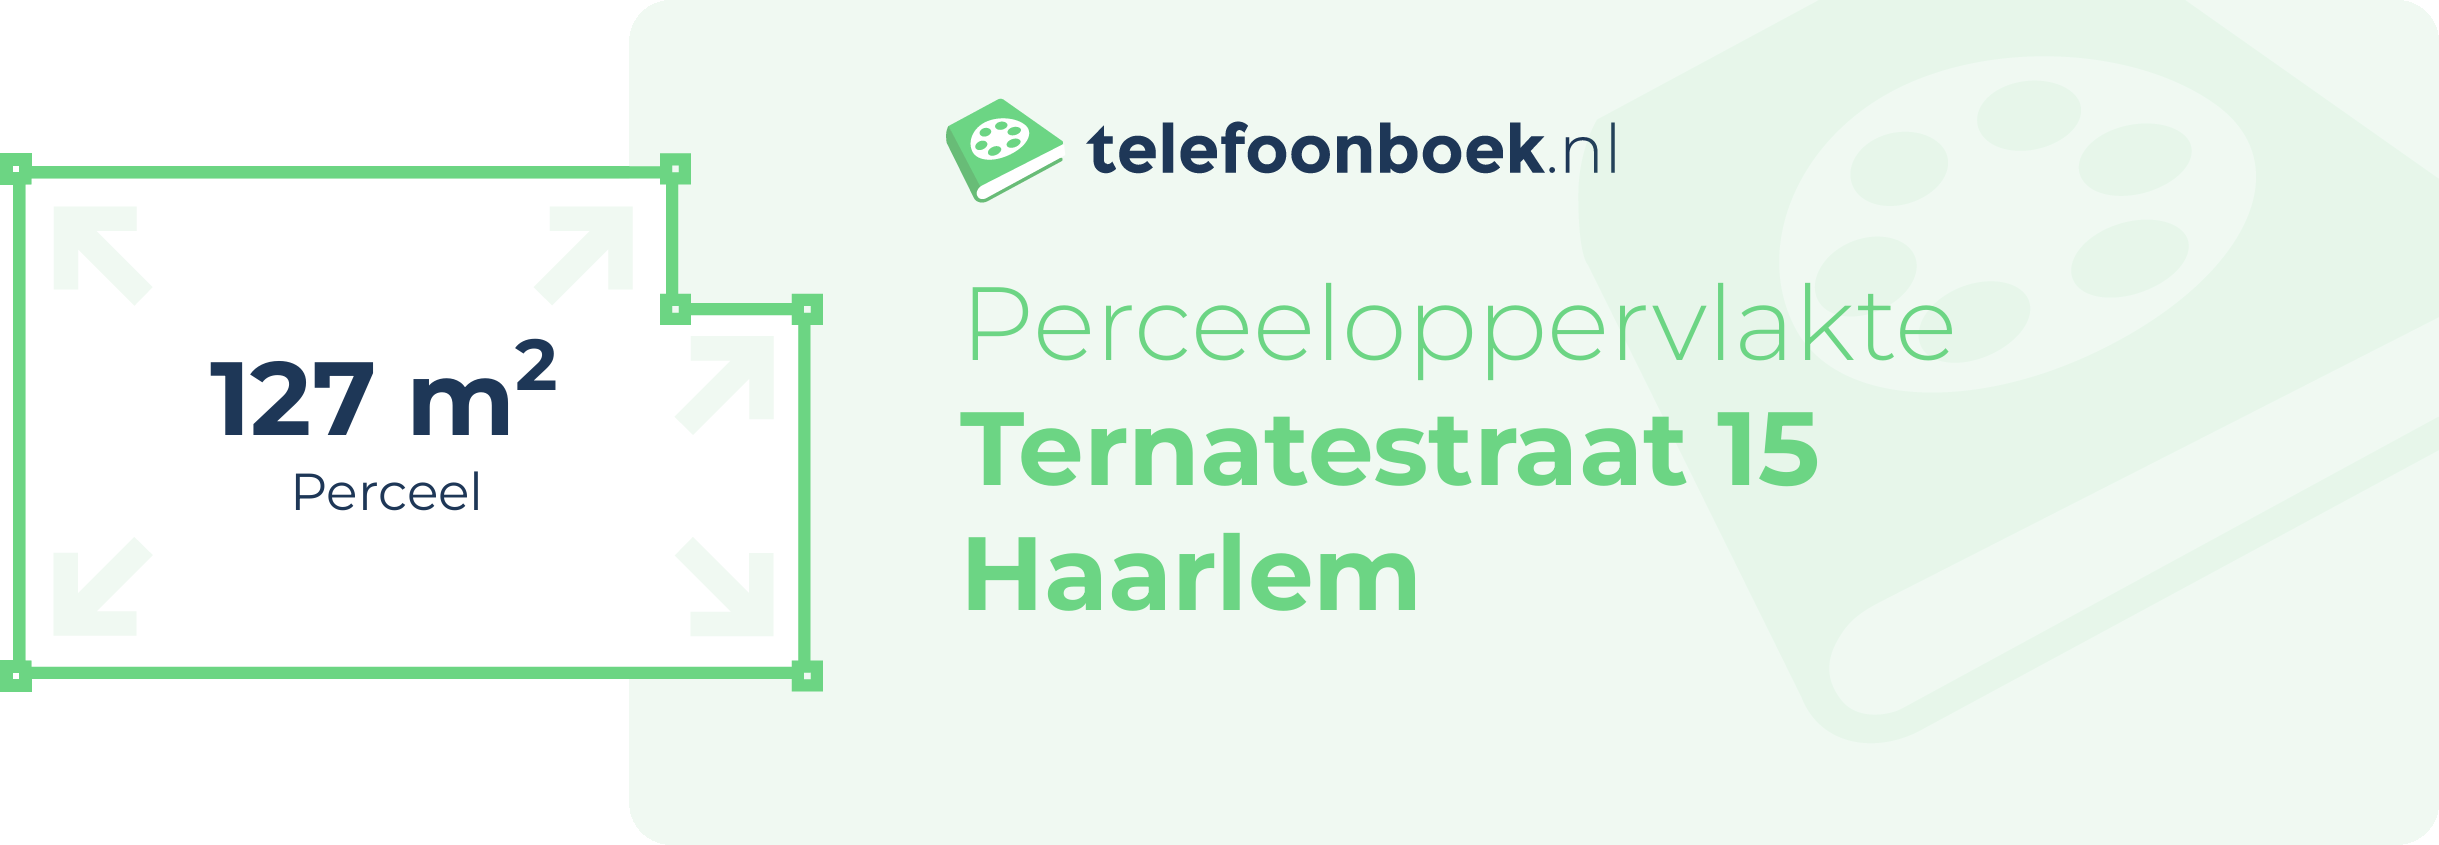 Perceeloppervlakte Ternatestraat 15 Haarlem